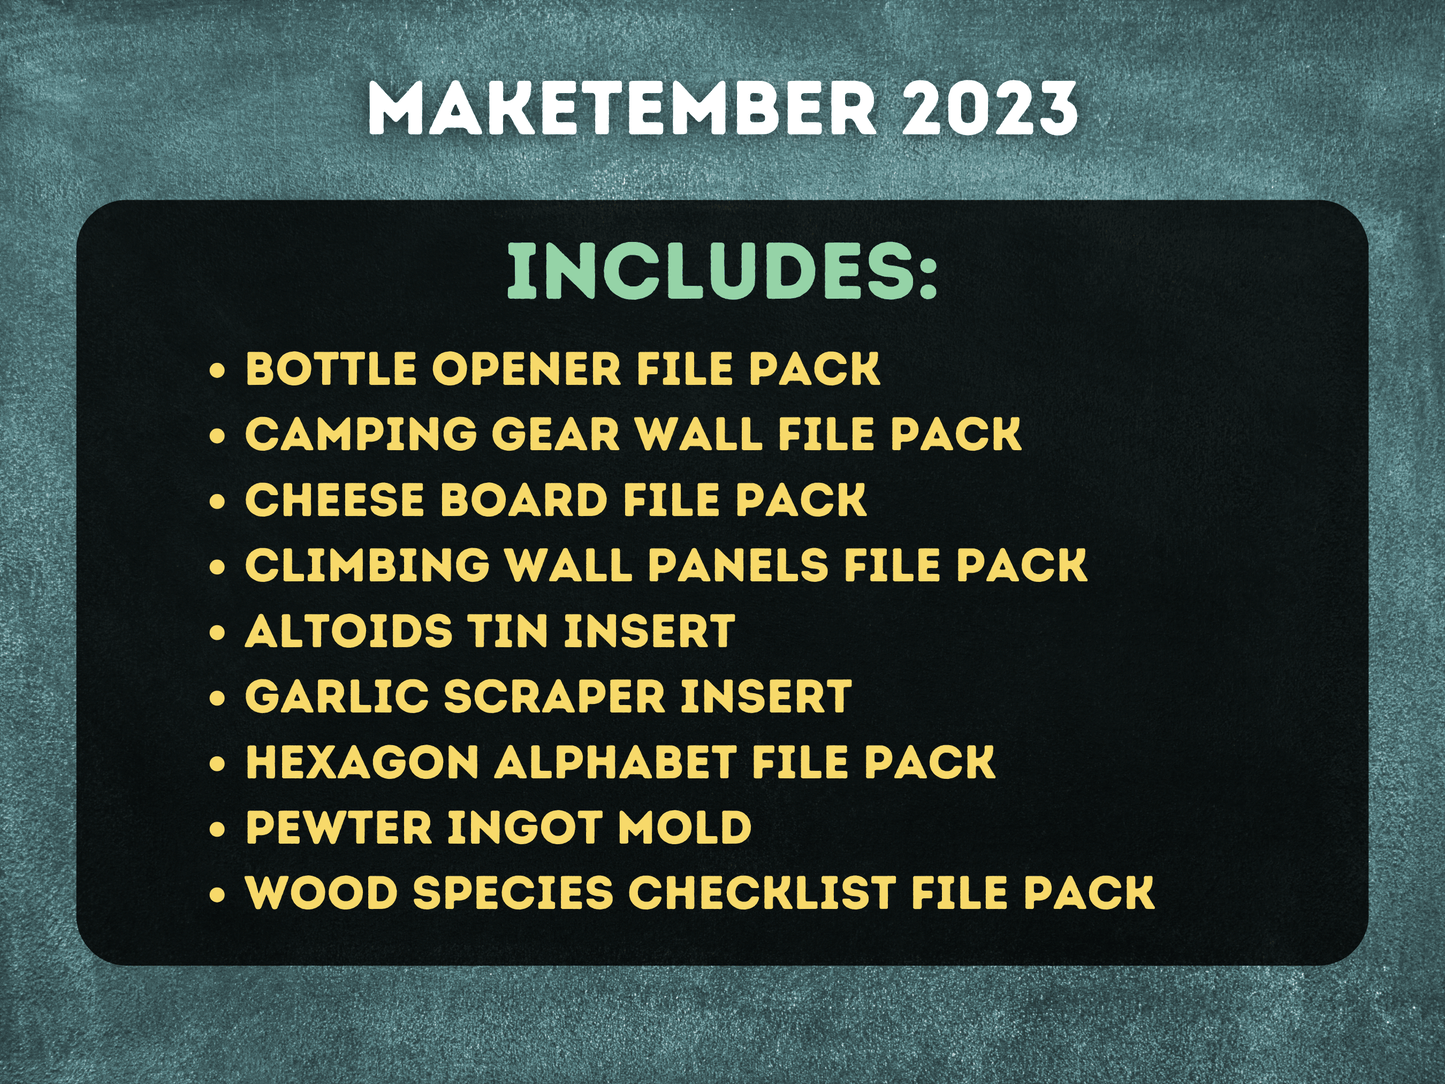 2023 + 2022 Maketember Mega File Pack